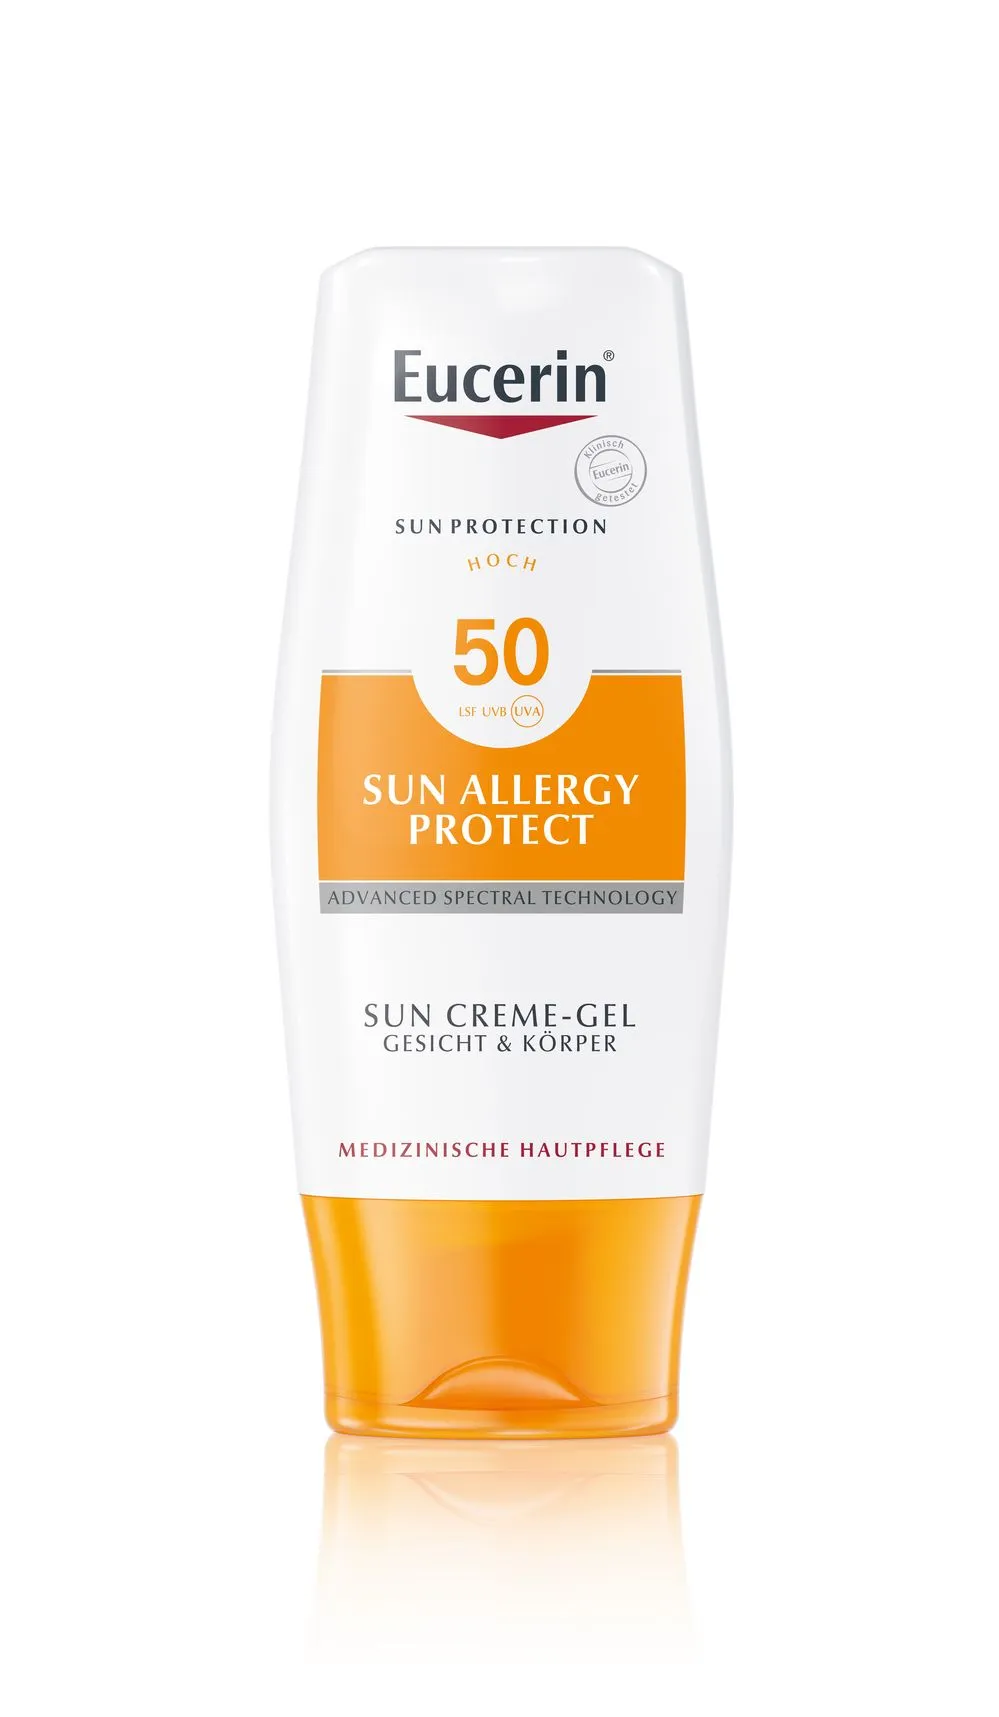 Eucerin SUN Allergy Protect SPF50